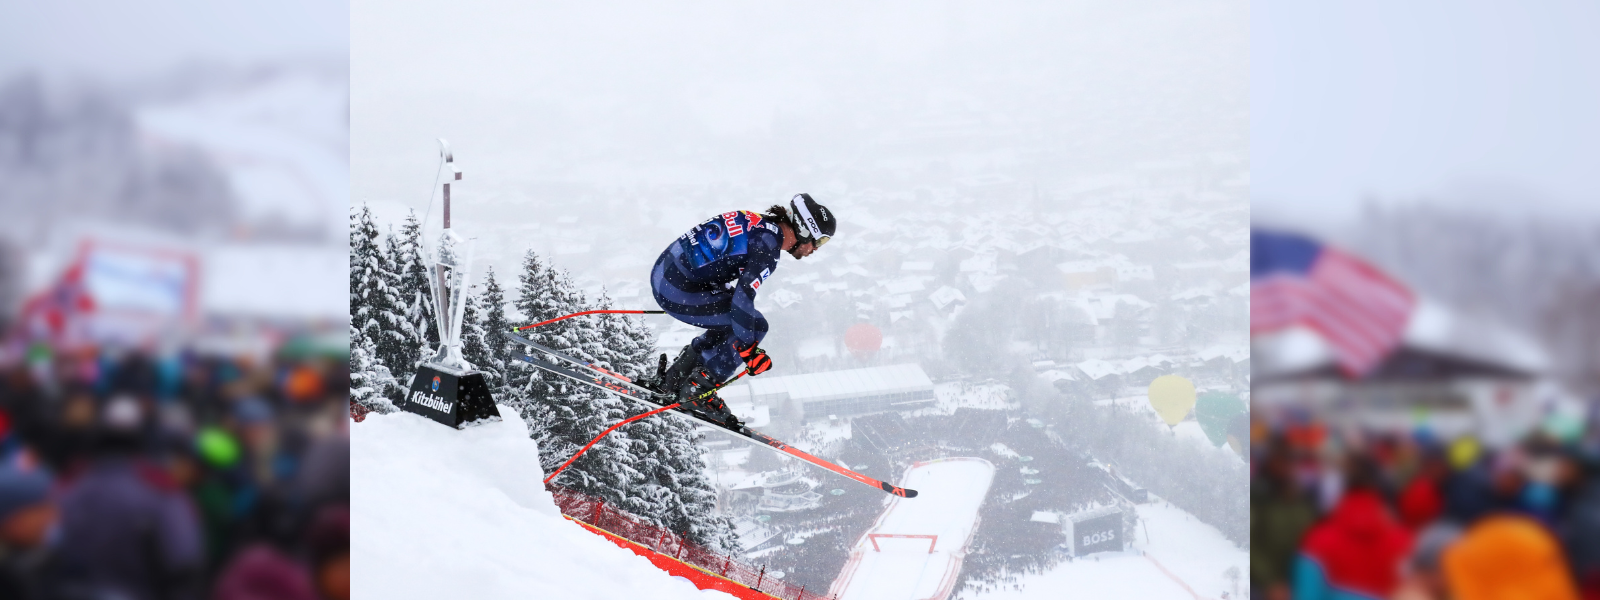 Kitzbühel World Cup Downhill Thrills on Streif!